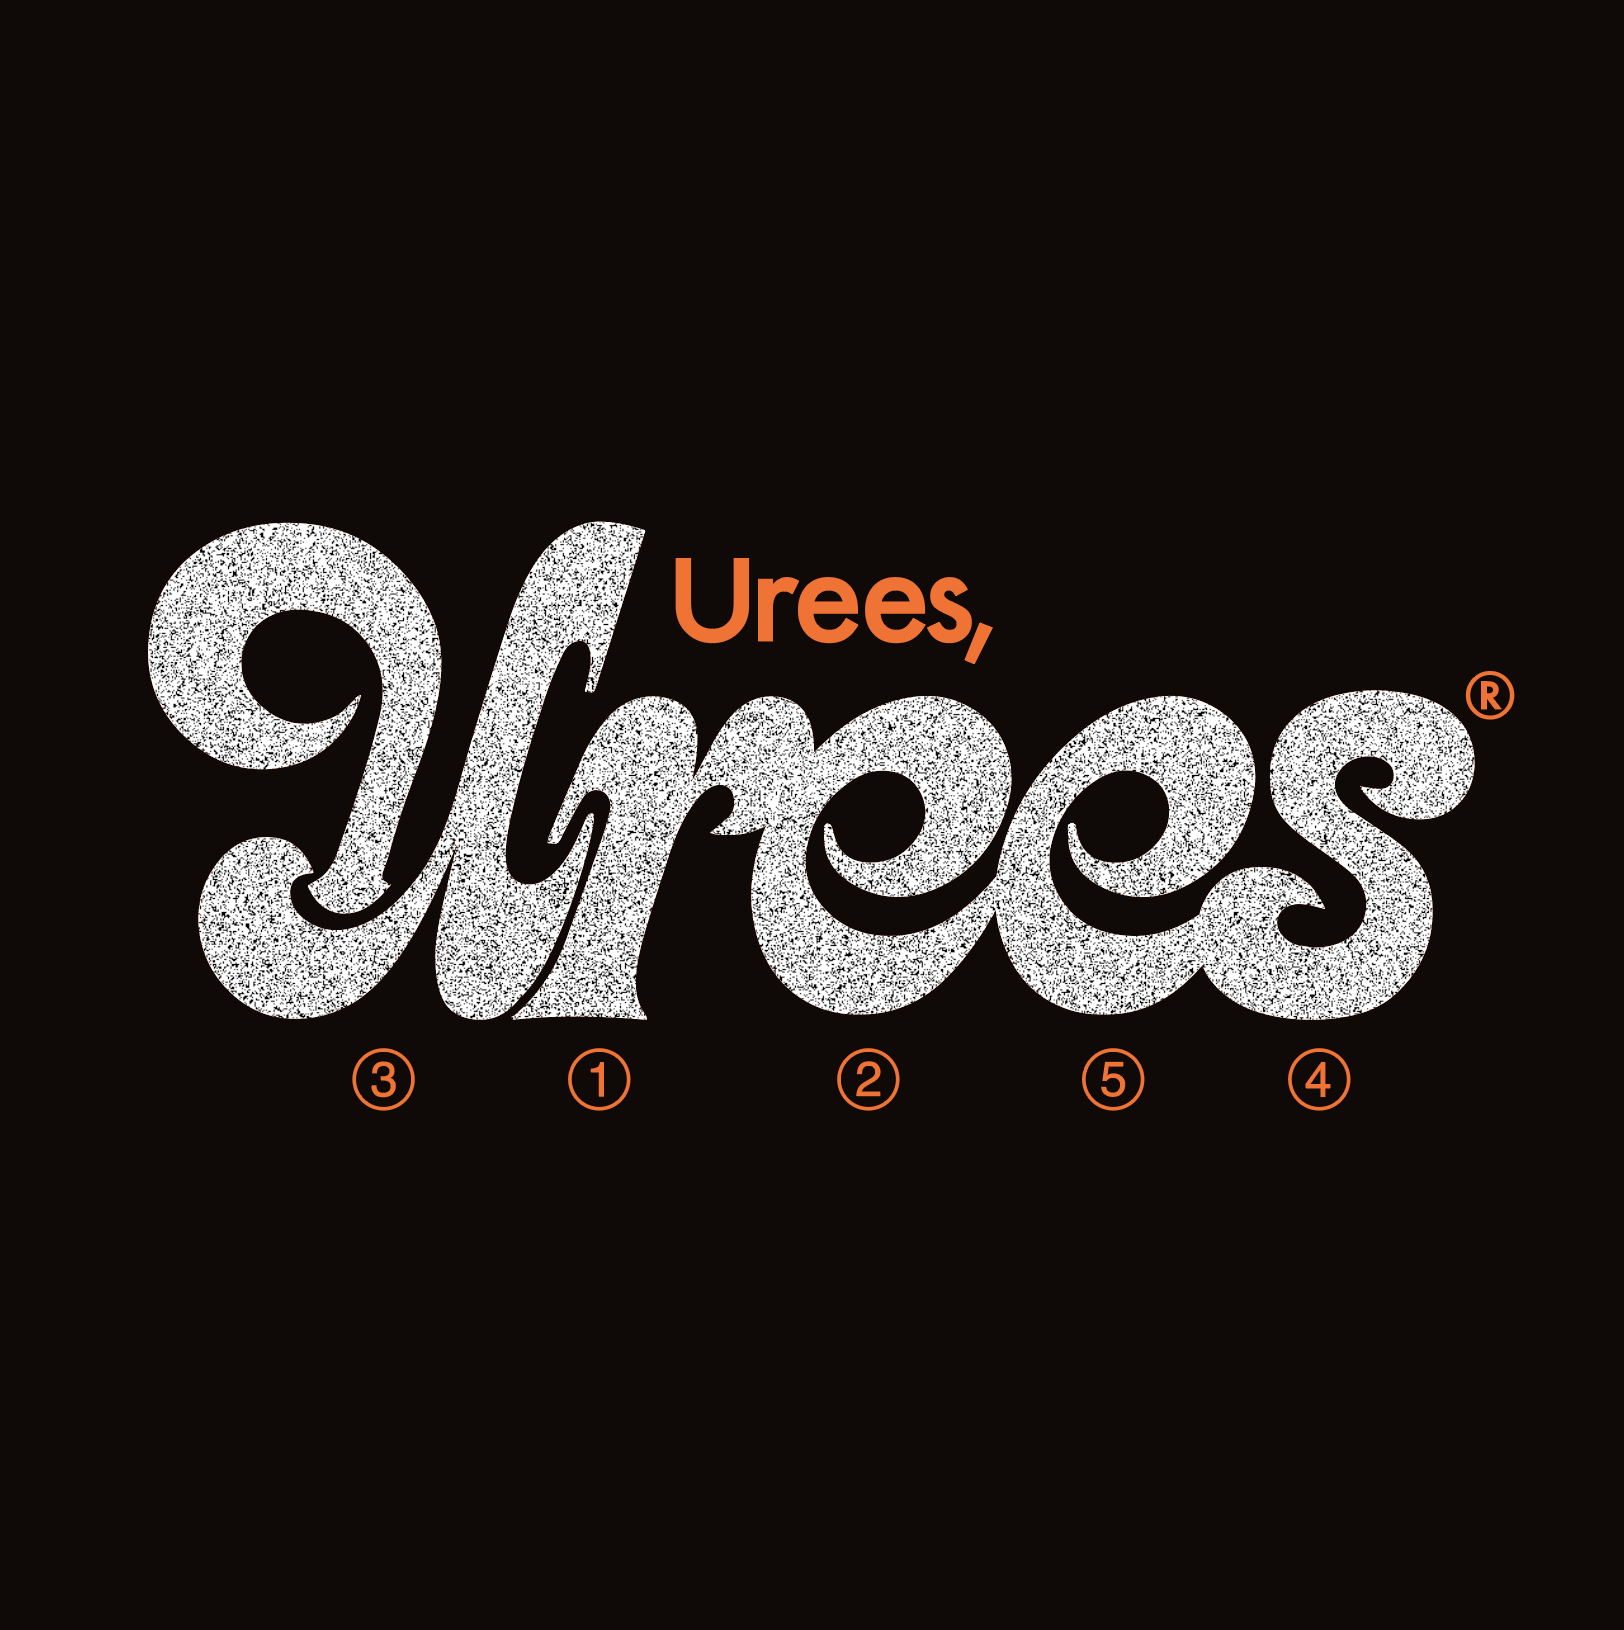 Urees logo